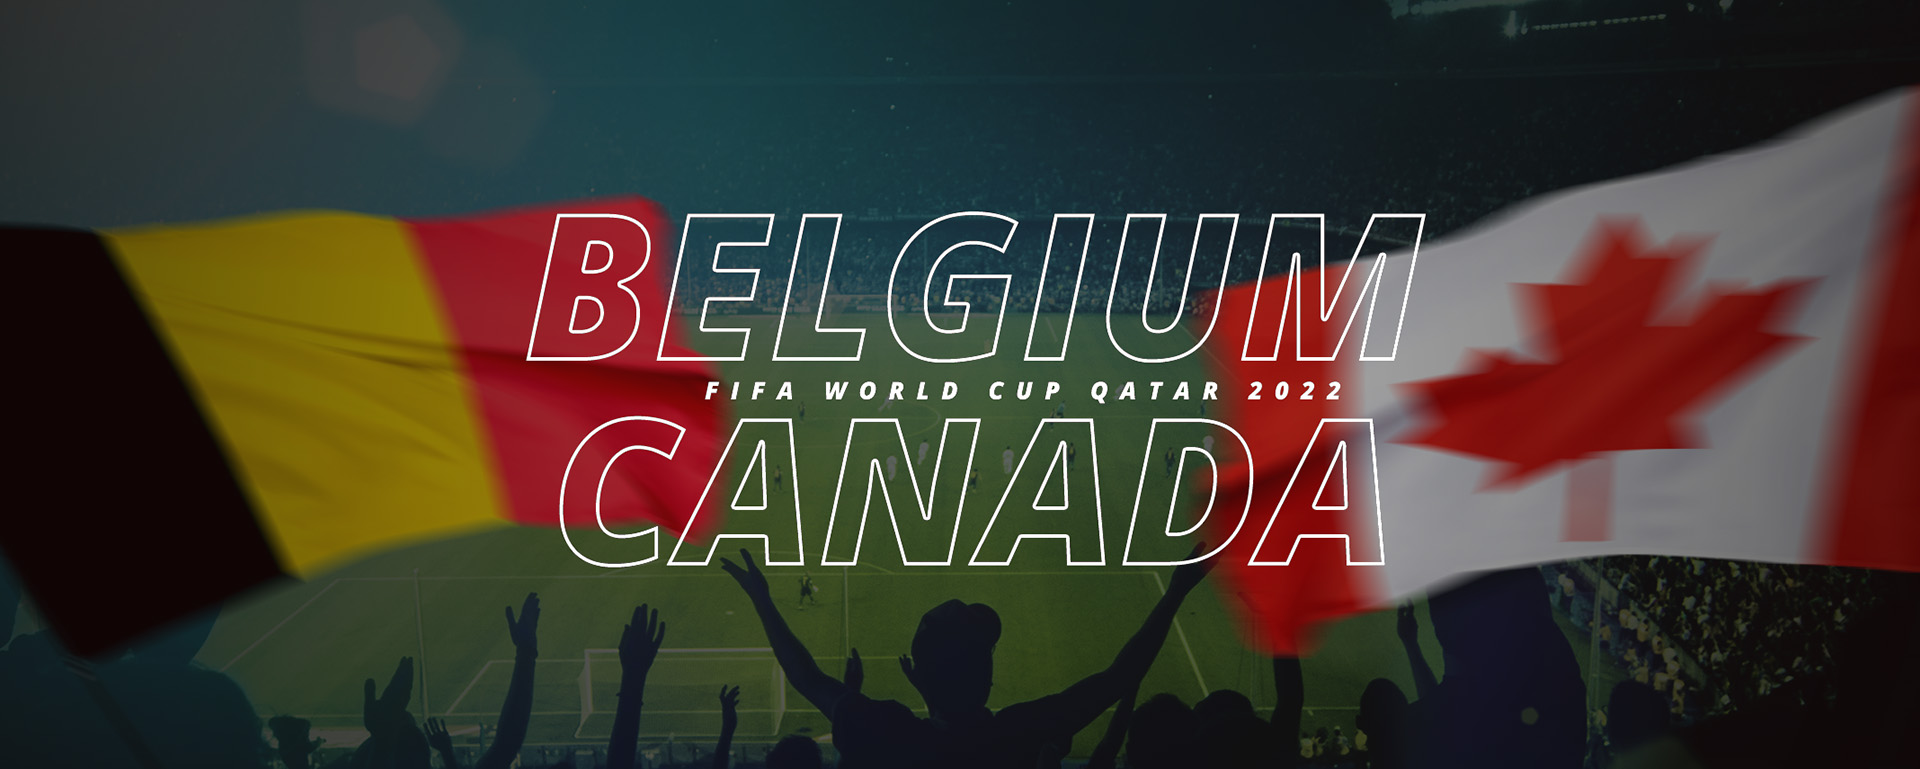 BELGIUM VS CANADA | FIFA WORLD CUP QATAR 2022